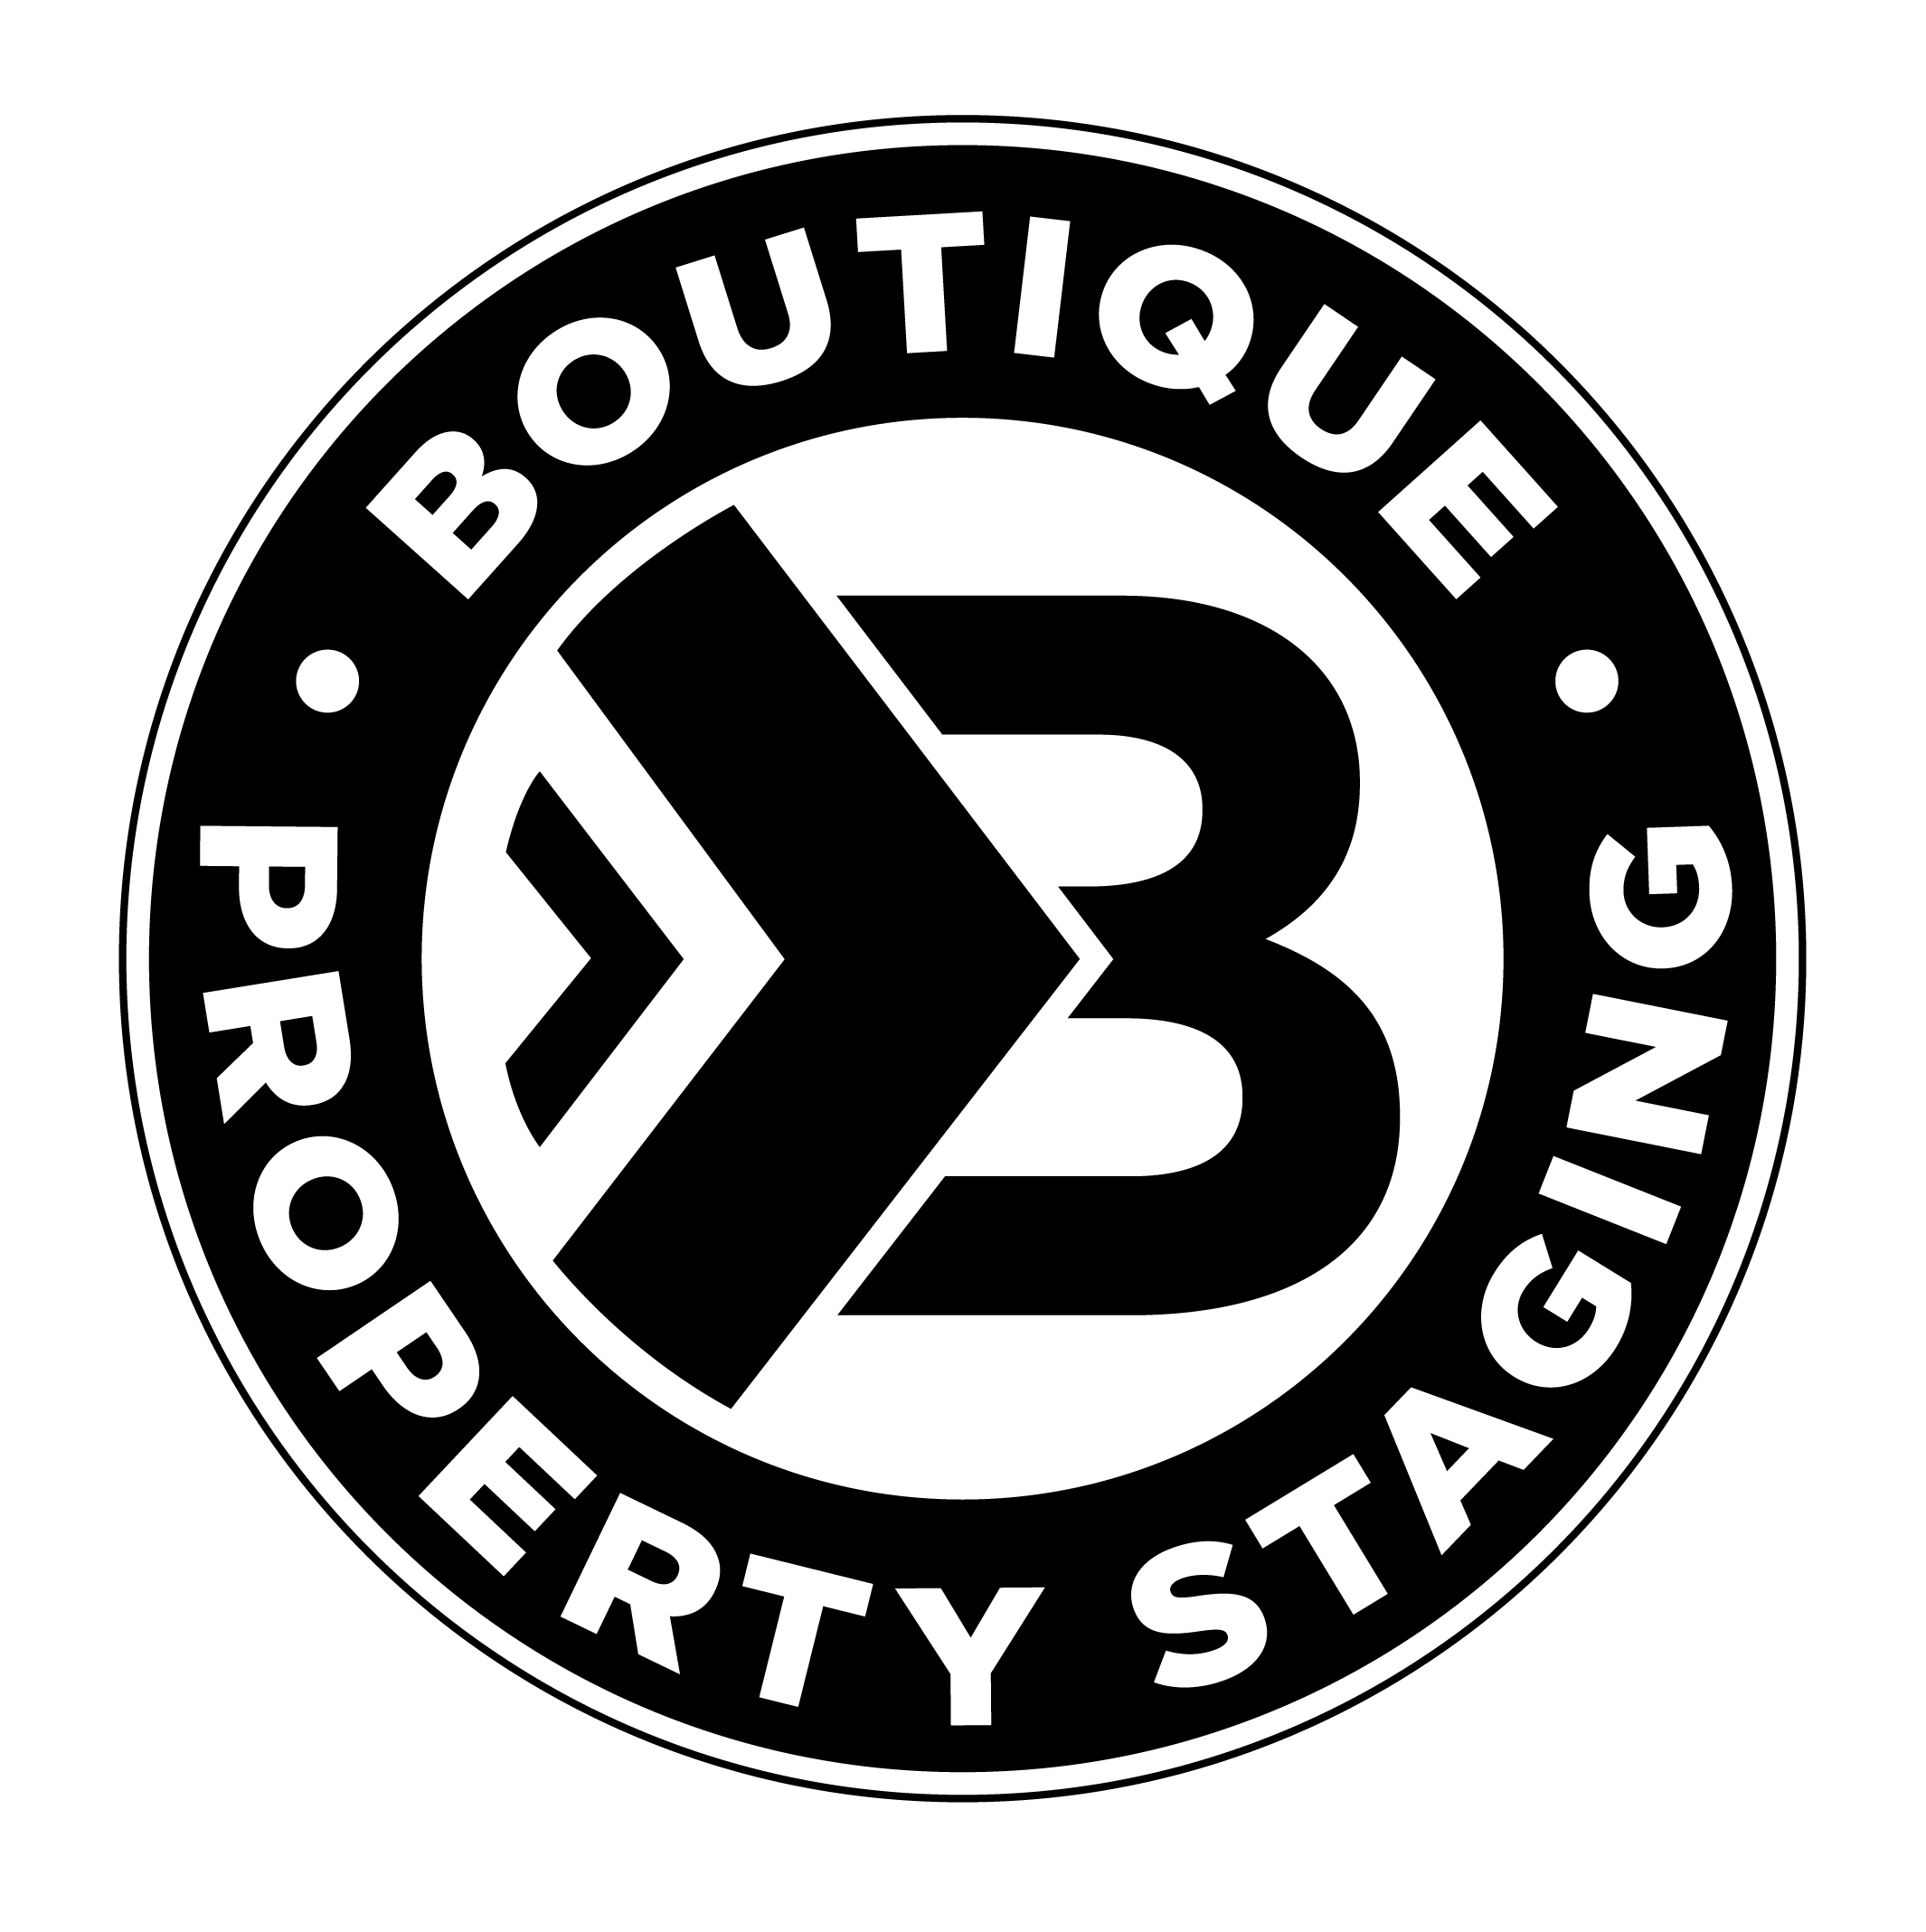 Boutique Property Staging - Affordable Melbourne based home staging!